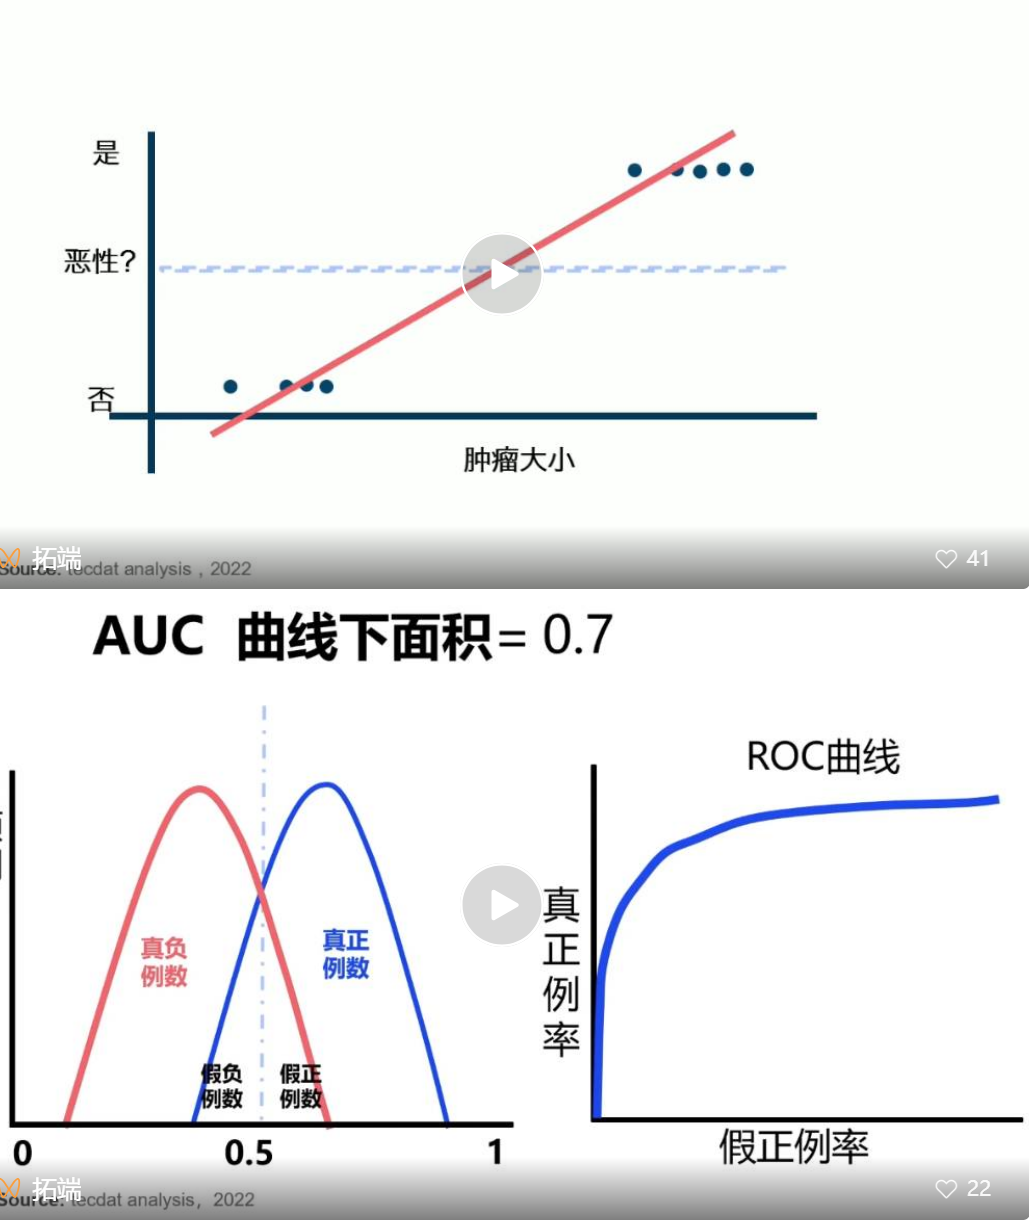 R语言逻辑回归logistic模型ROC曲线可视化分析2例：麻醉剂用量影响、汽车购买行为1